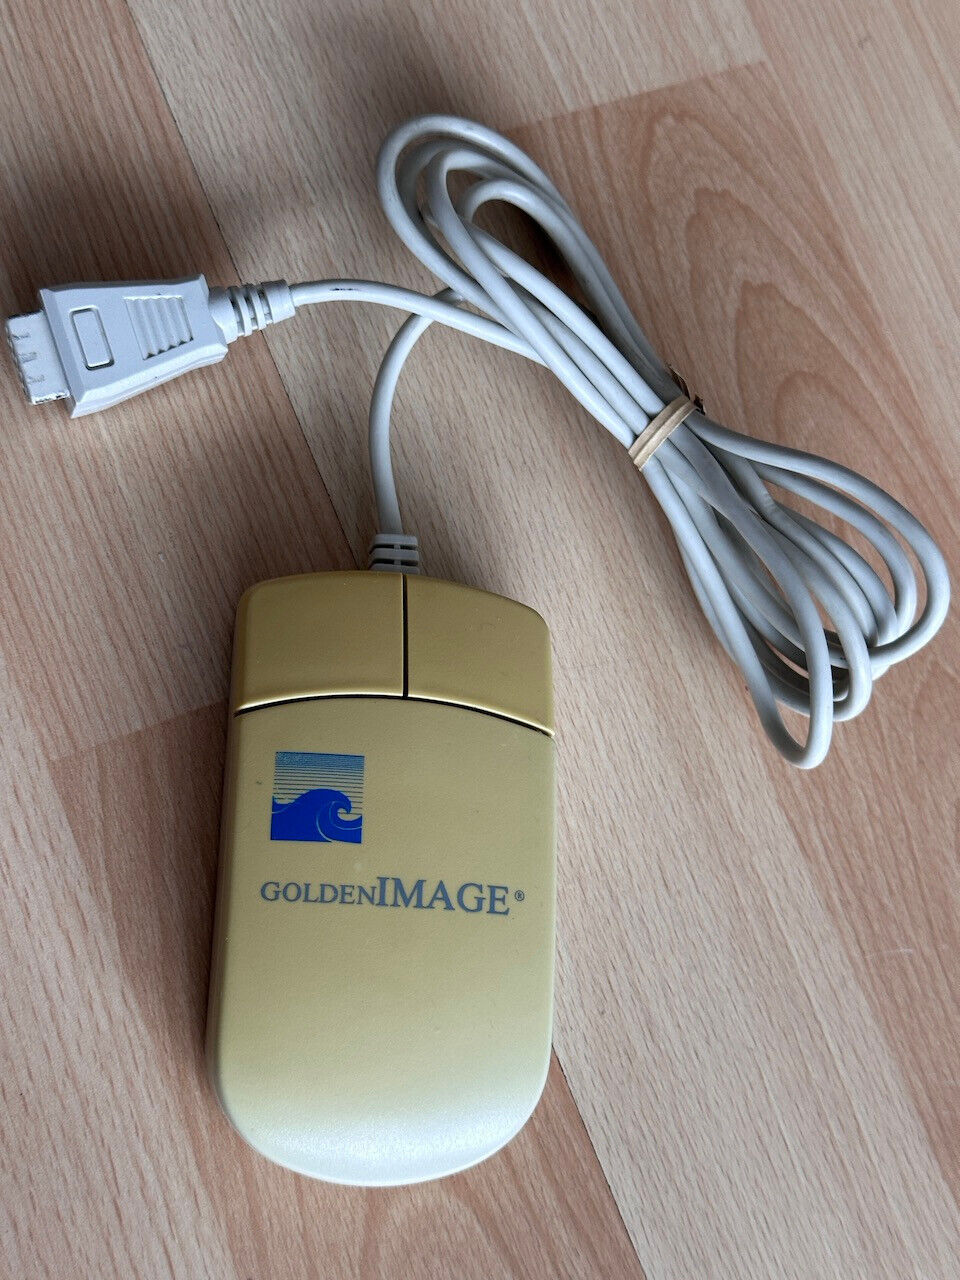 goldenIMAGE GI-500 Commodore - Amiga / Mouse / Mouse, Used #01 24